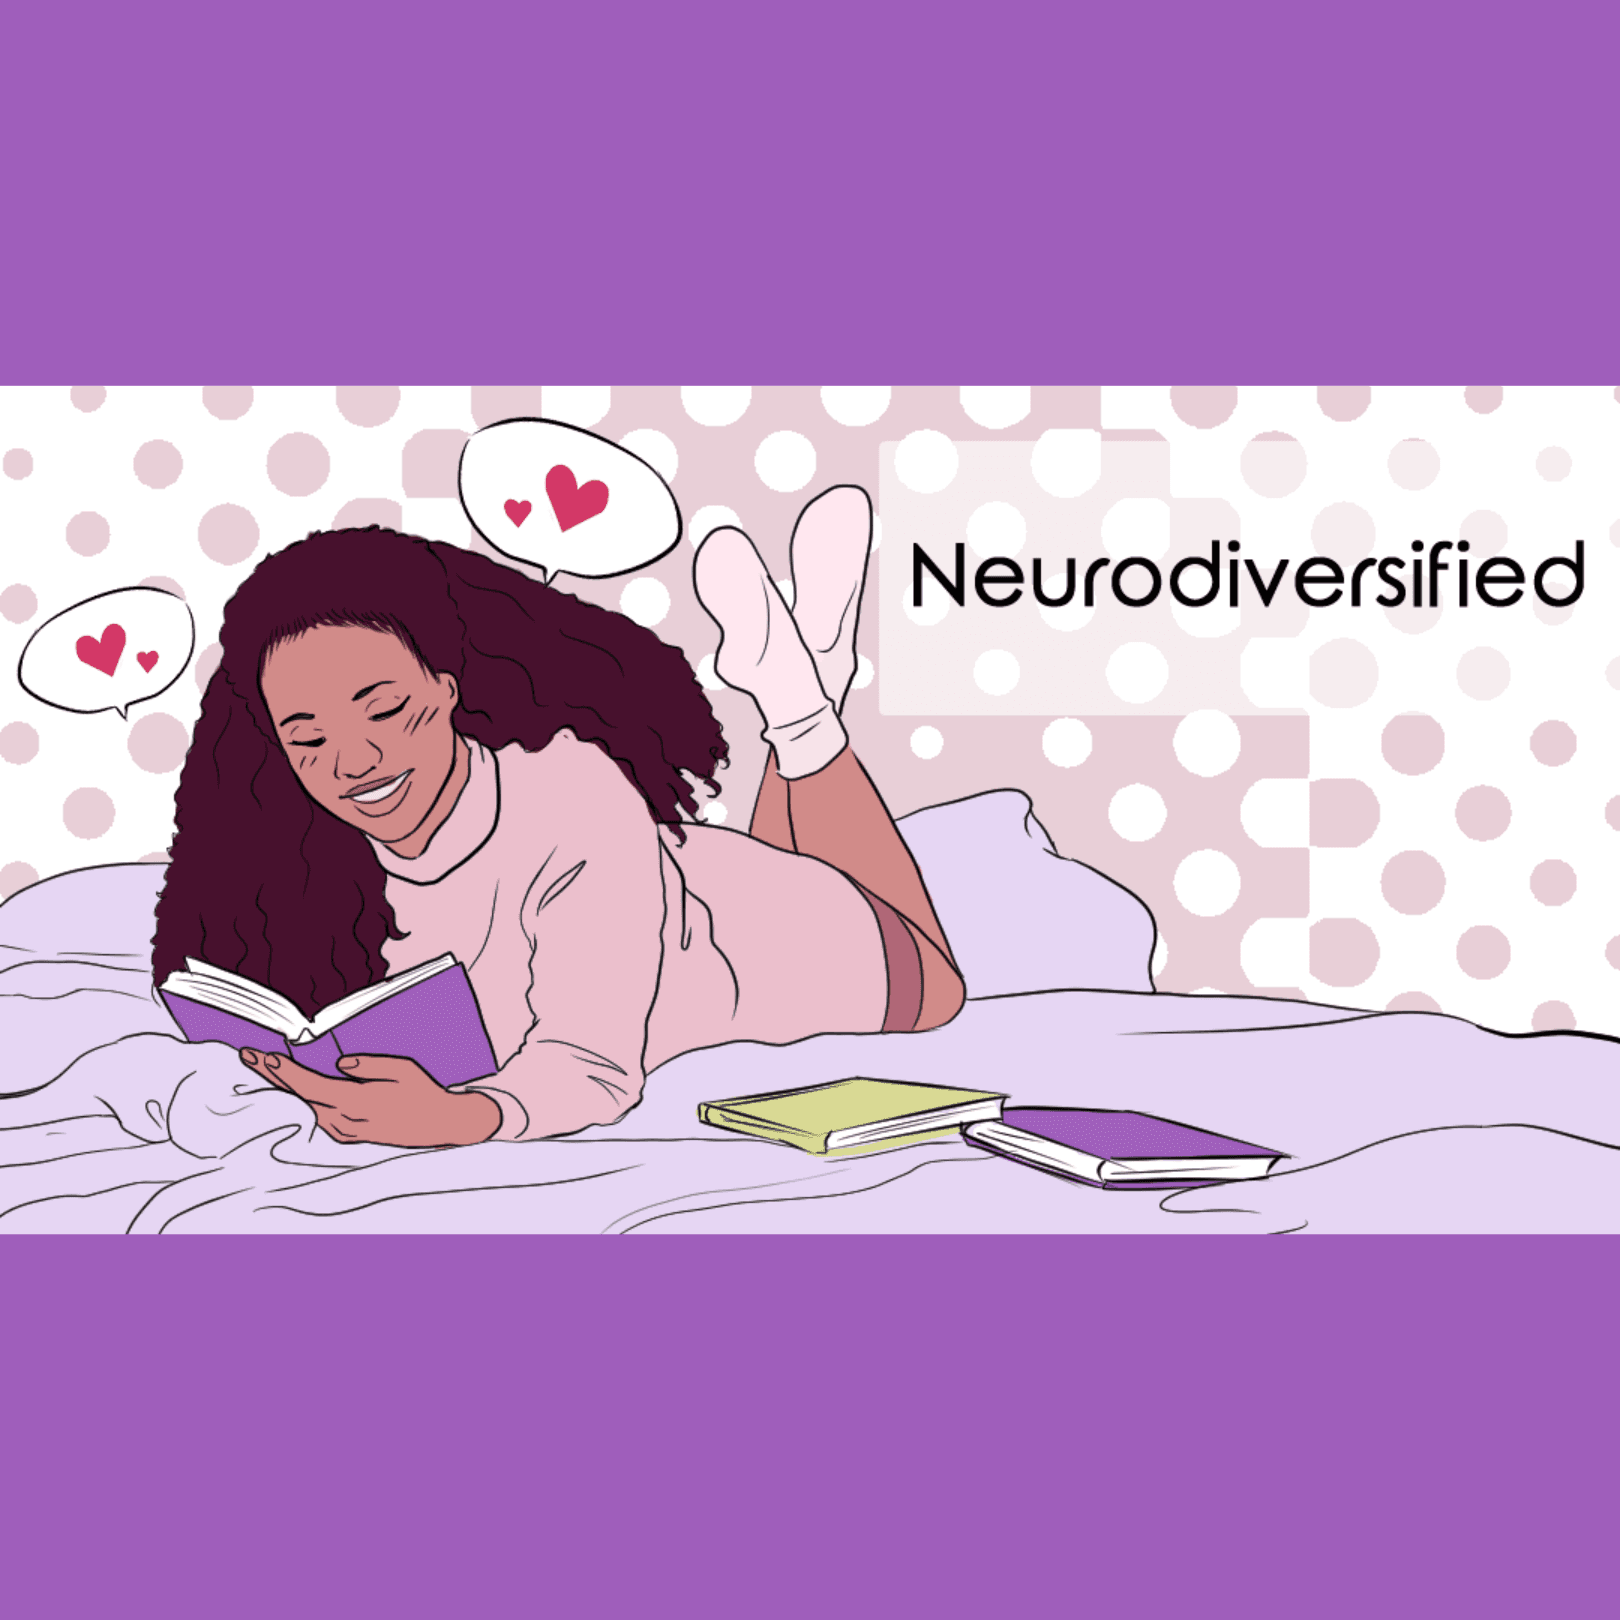 Thumbnail for "Neurodiversified: New Representation In Romance Novels".